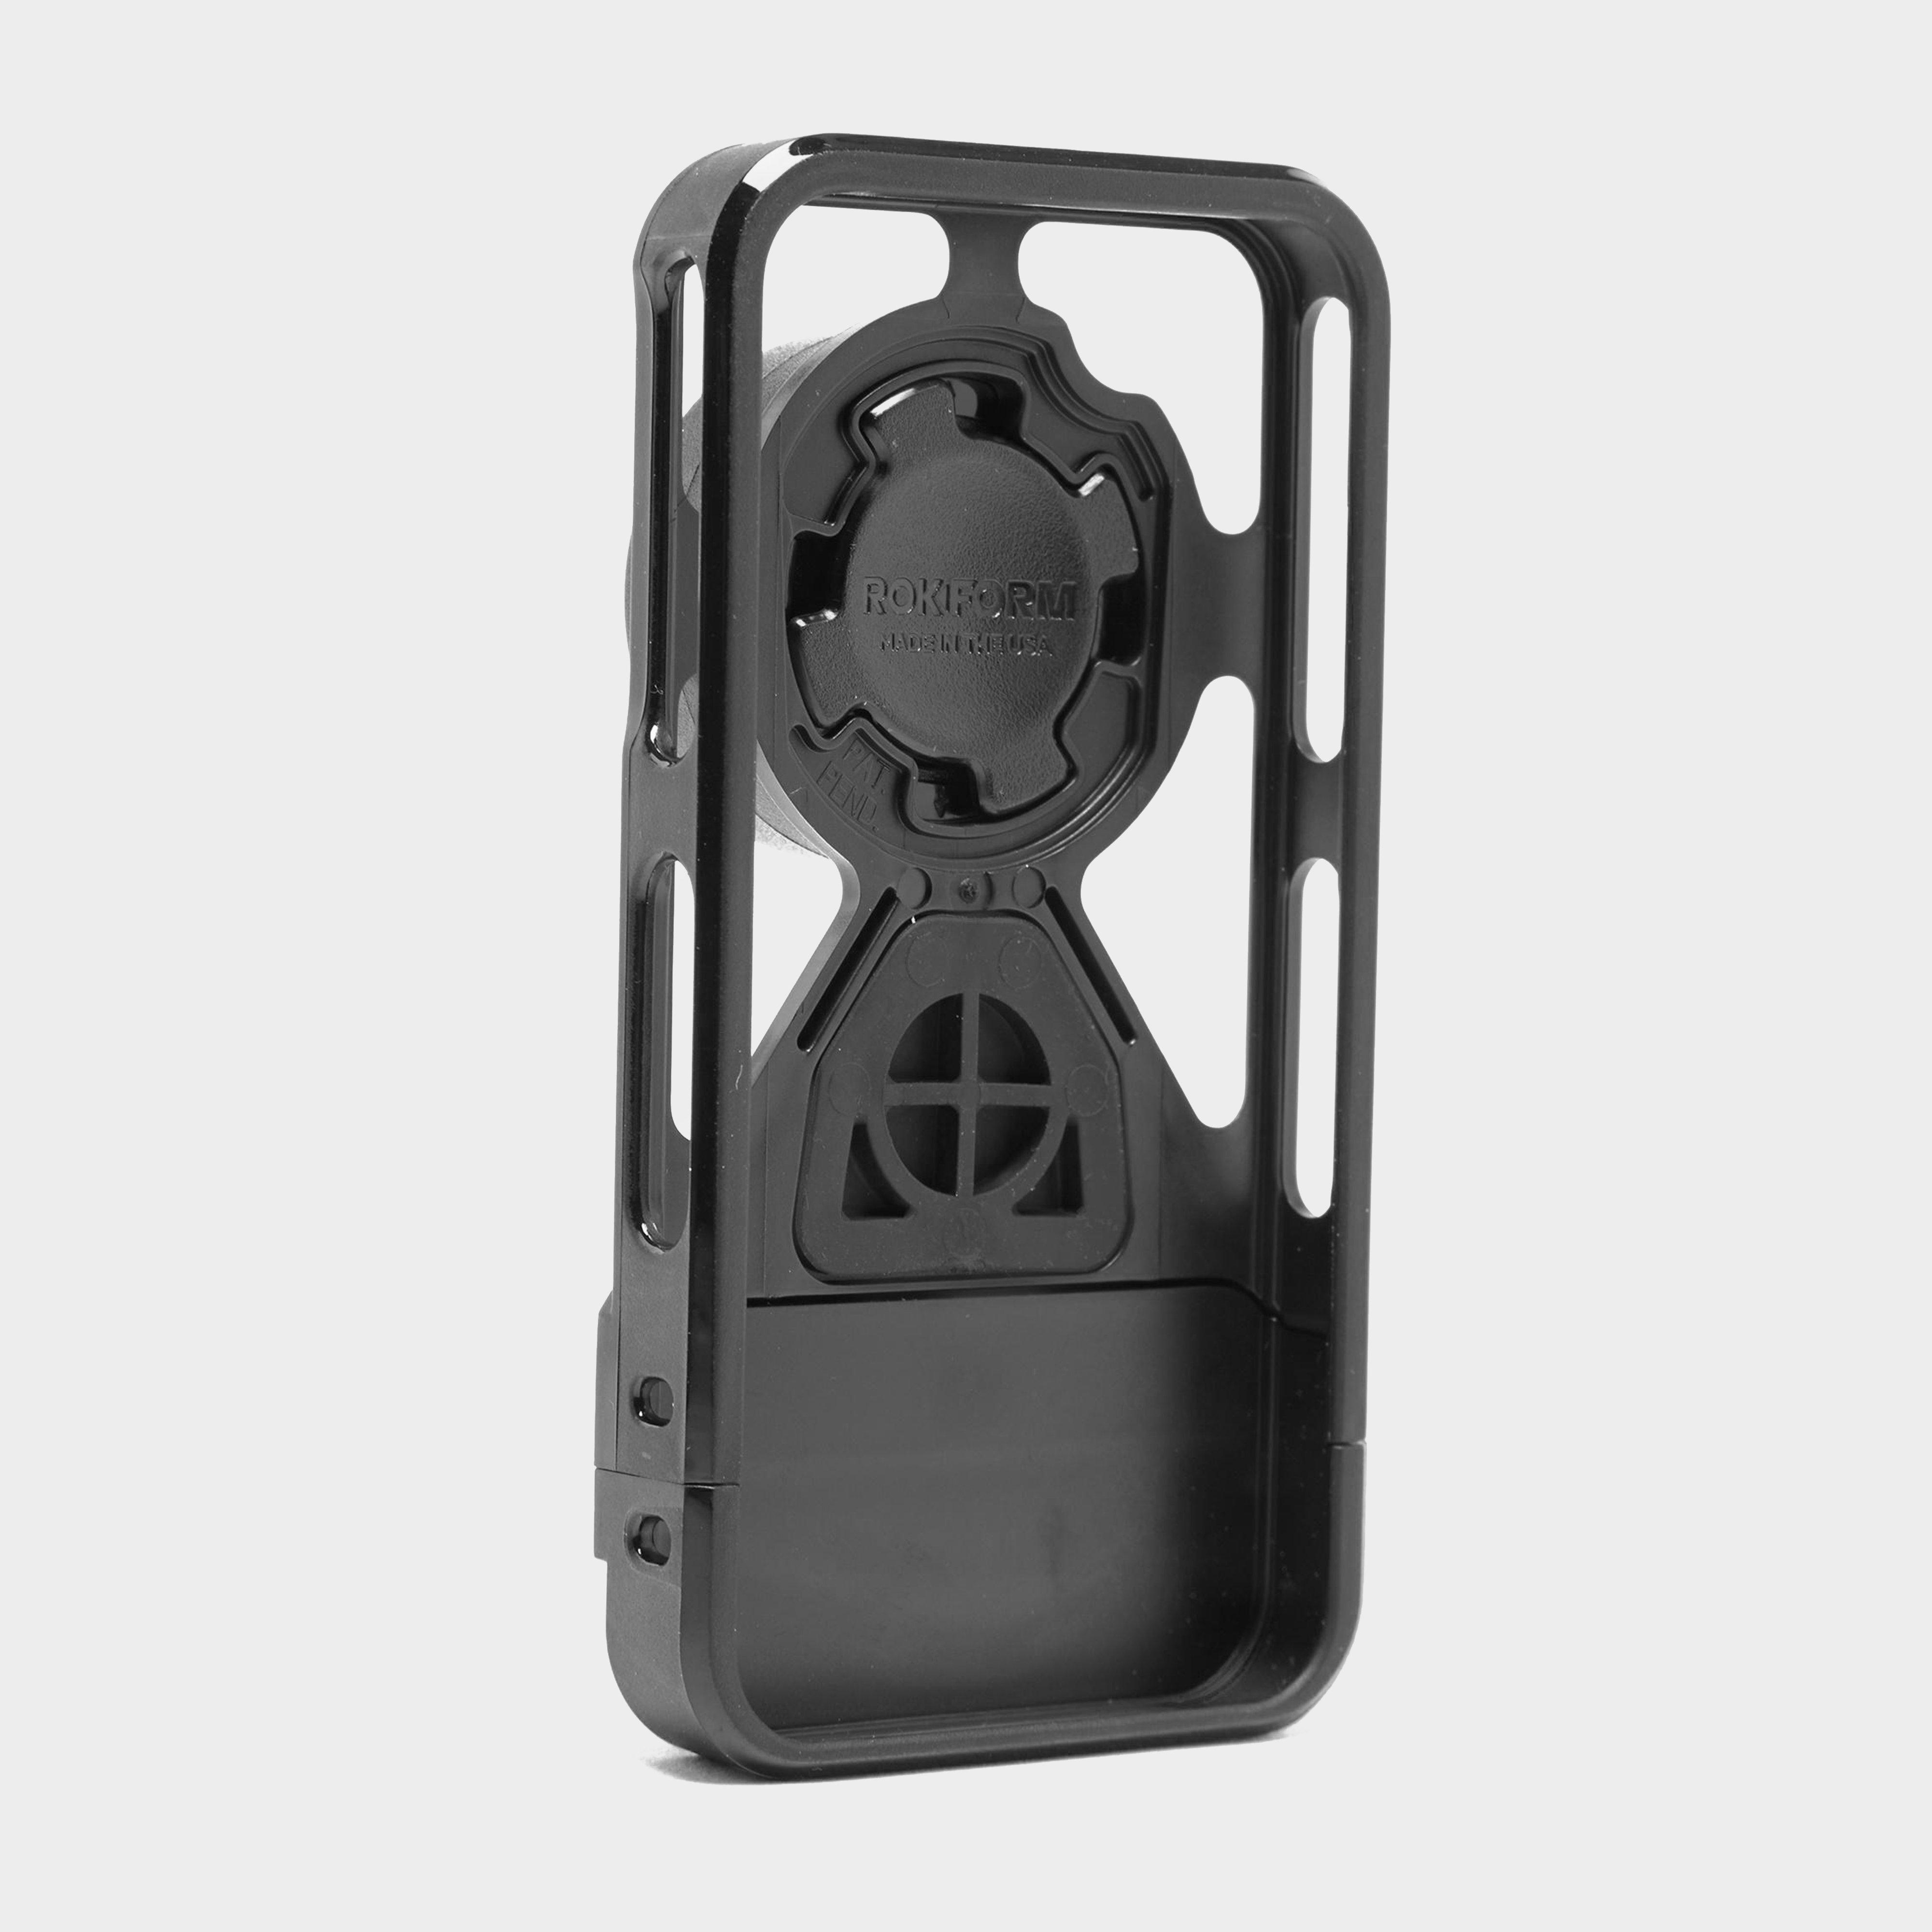 Rokform Iphone 4 Mountable Case - Black  Black